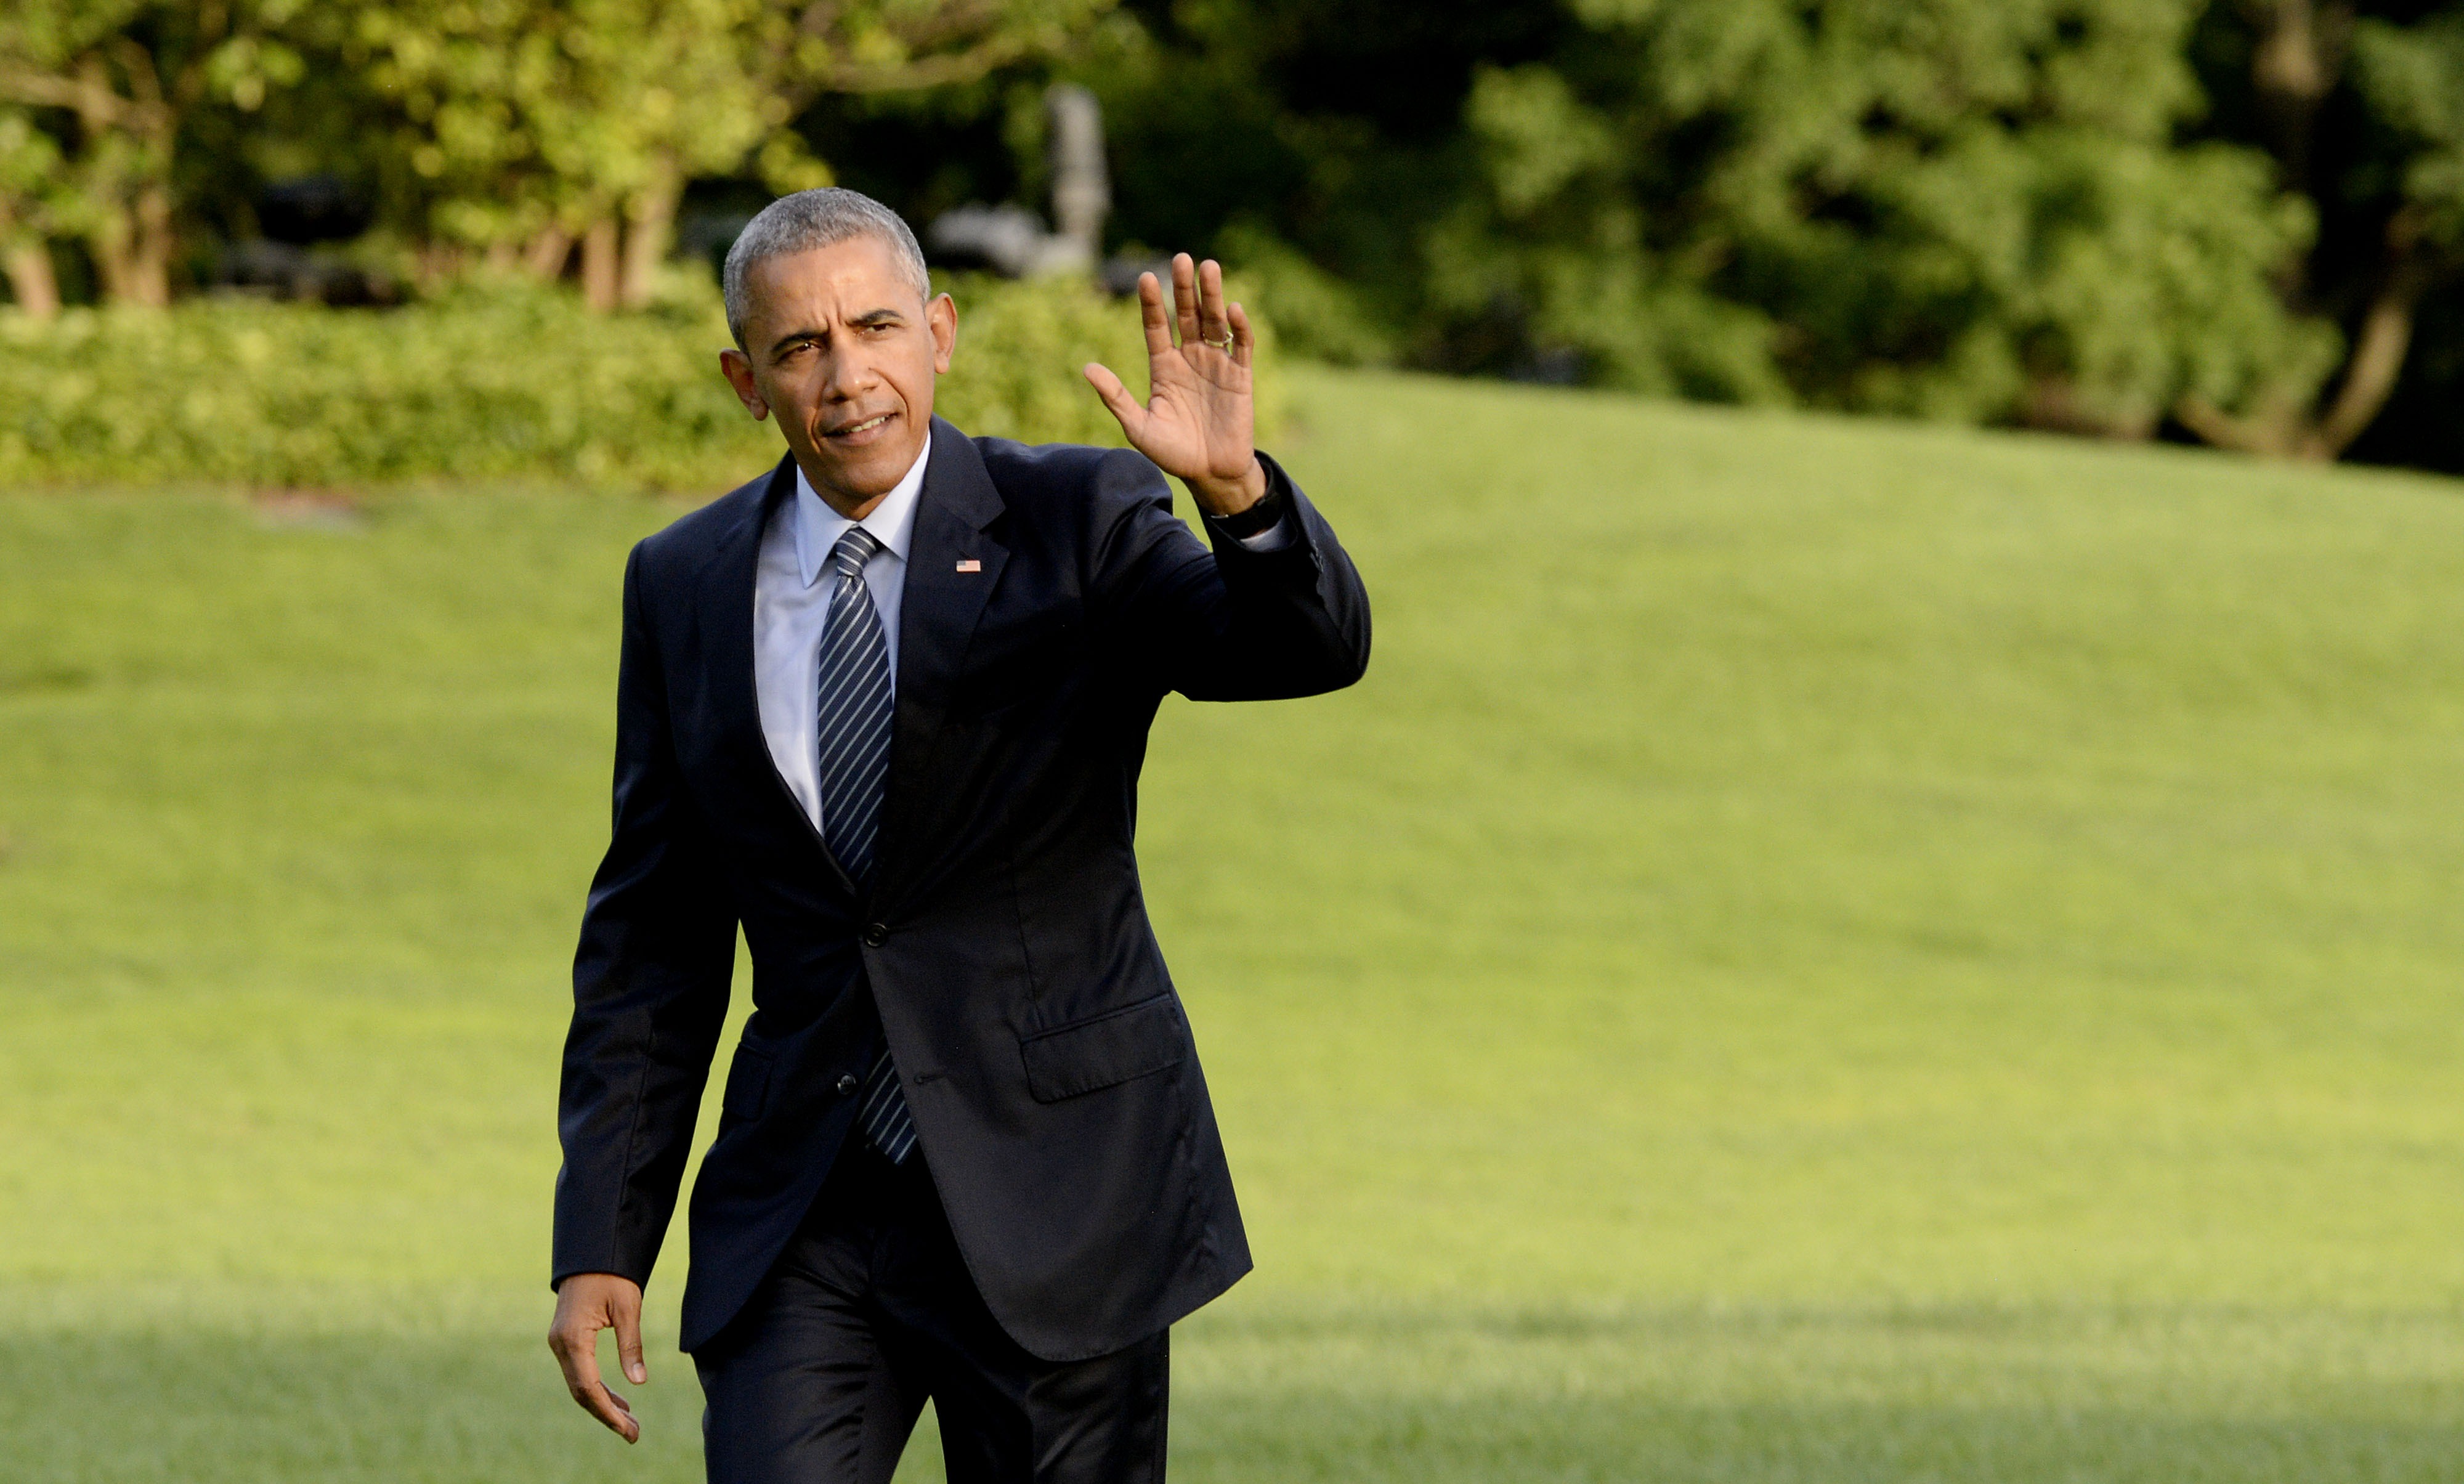 President Obama Returns to the White House